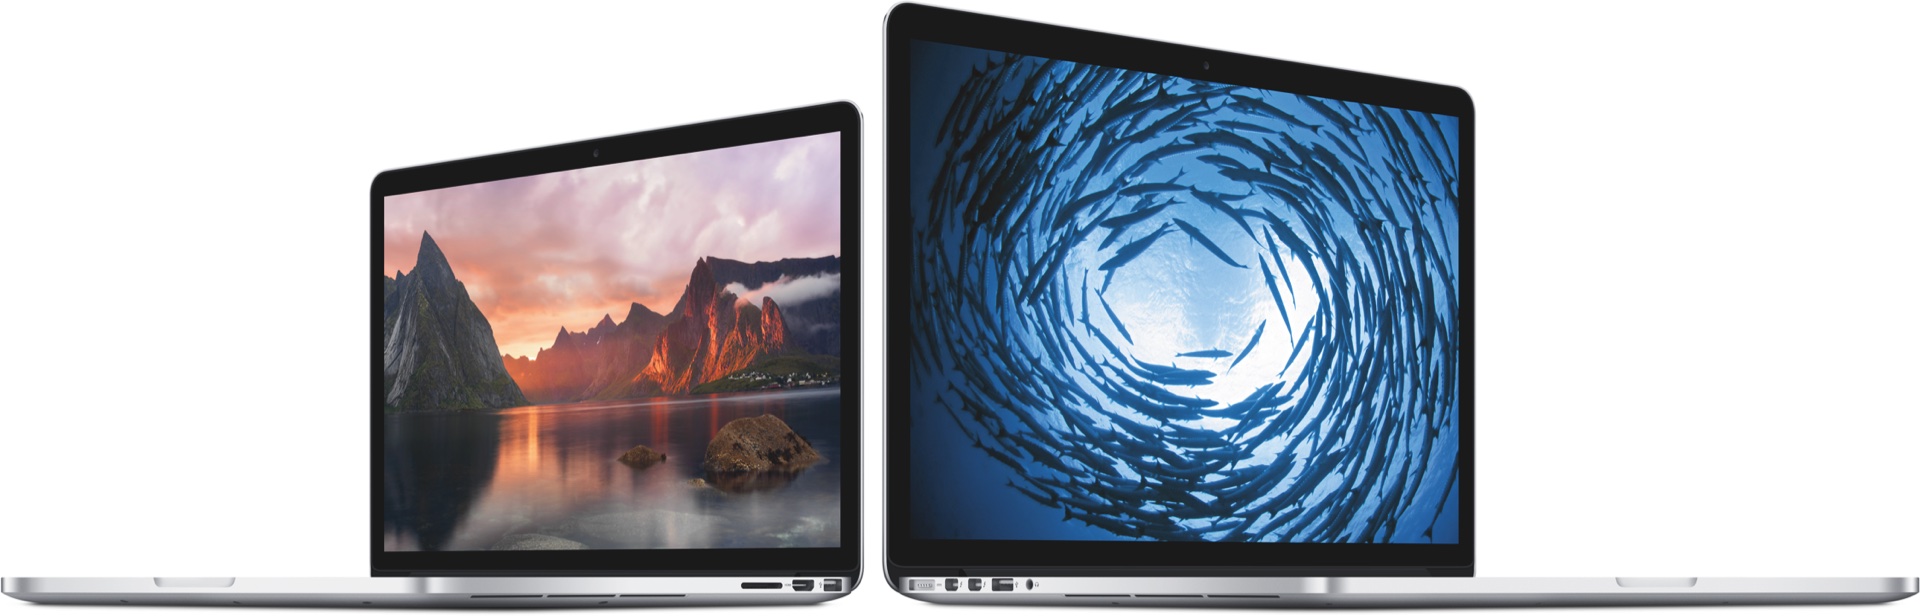 MacBook Pro baru dengan layar Retina